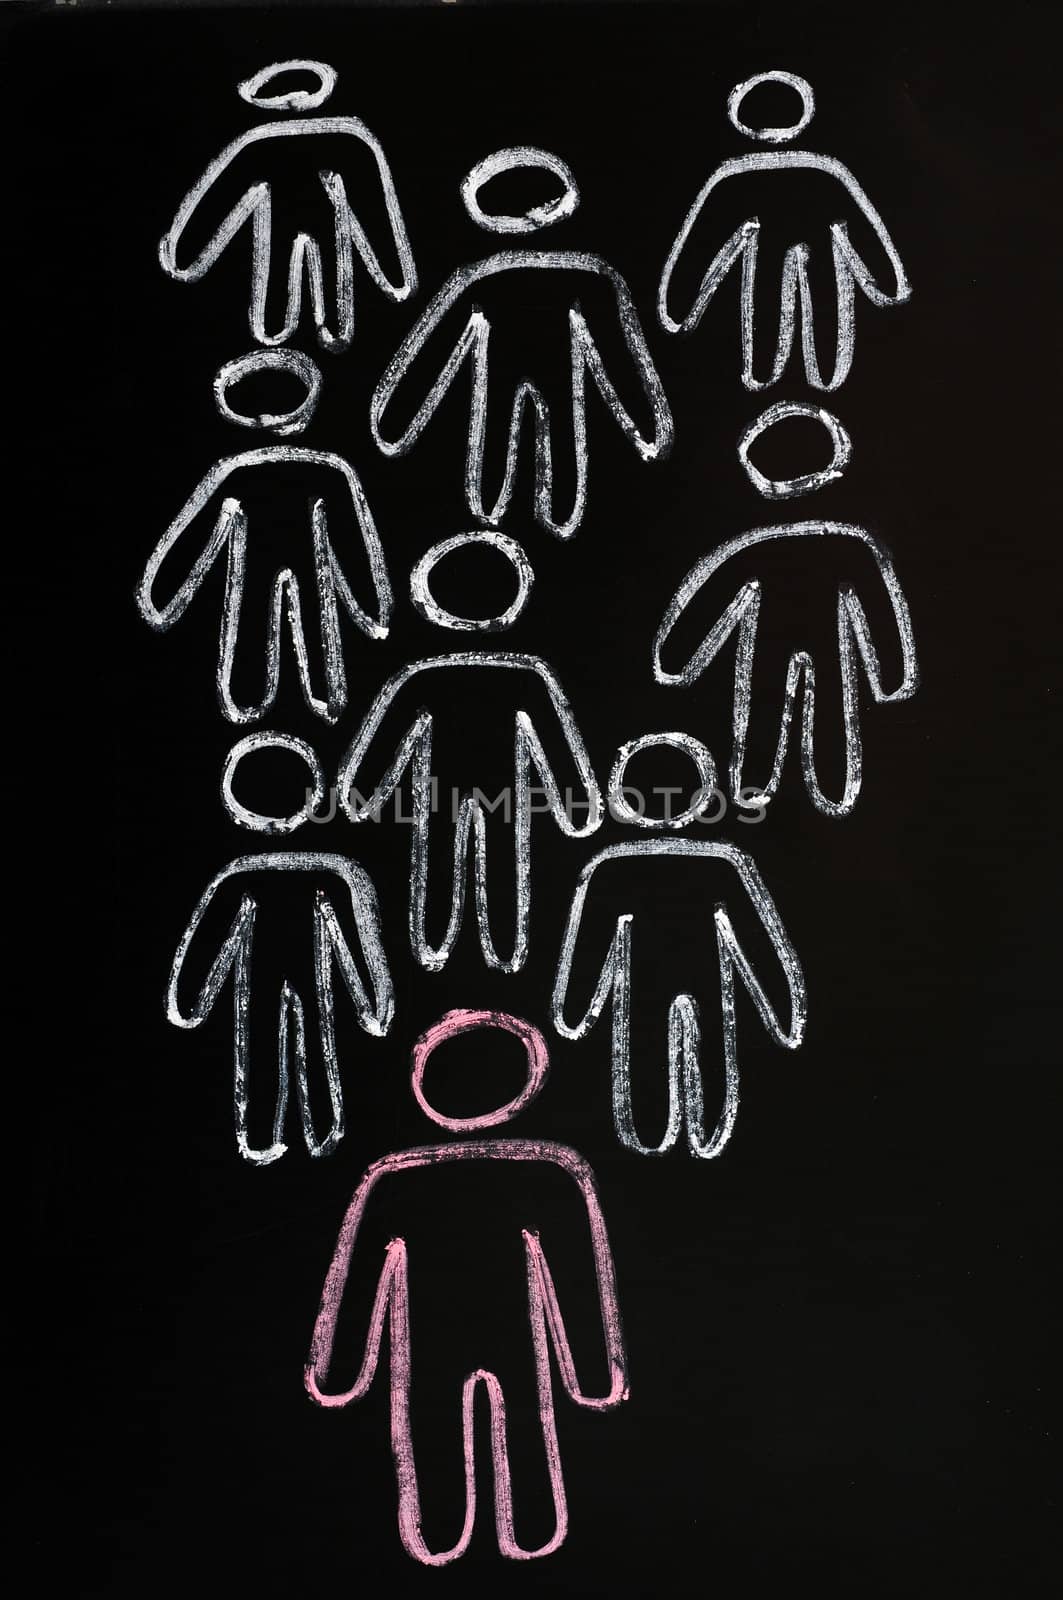 Working together team concept on a blackboard background